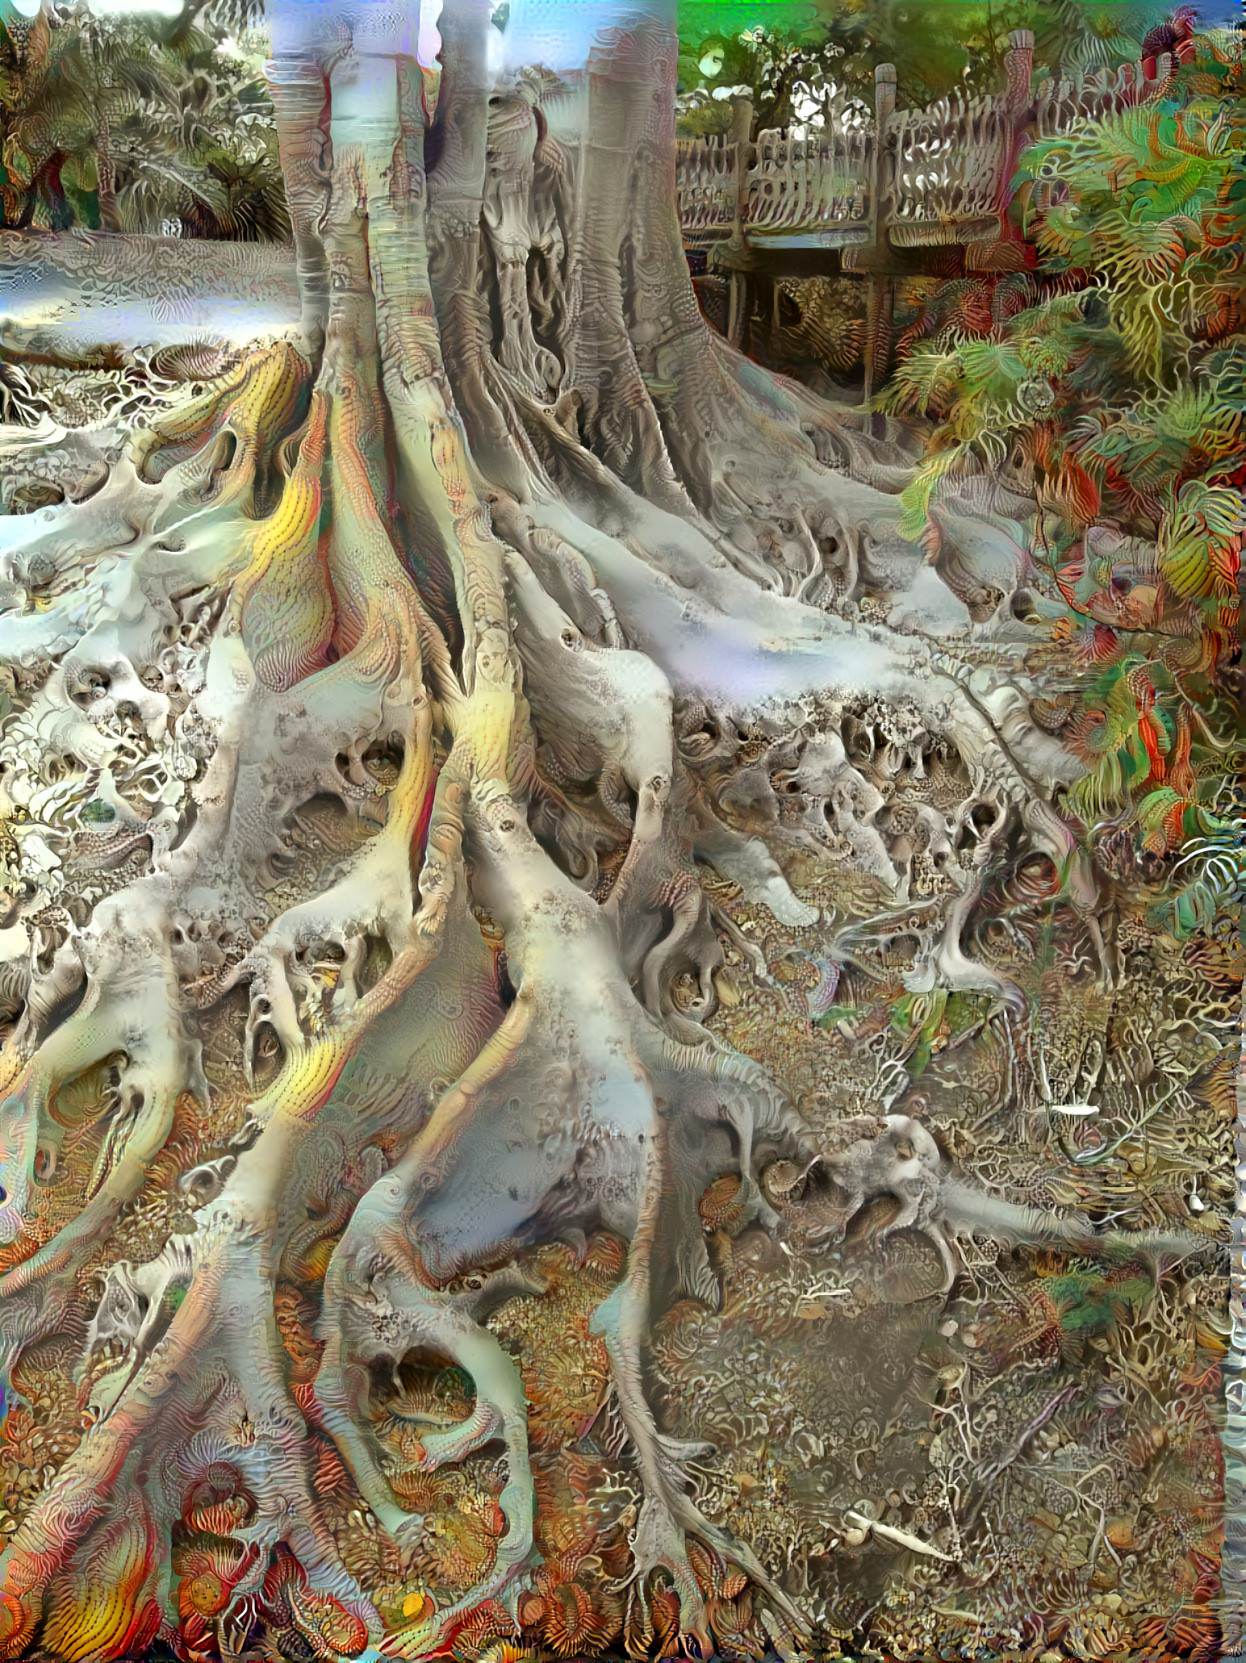 Ficus Tree Roots